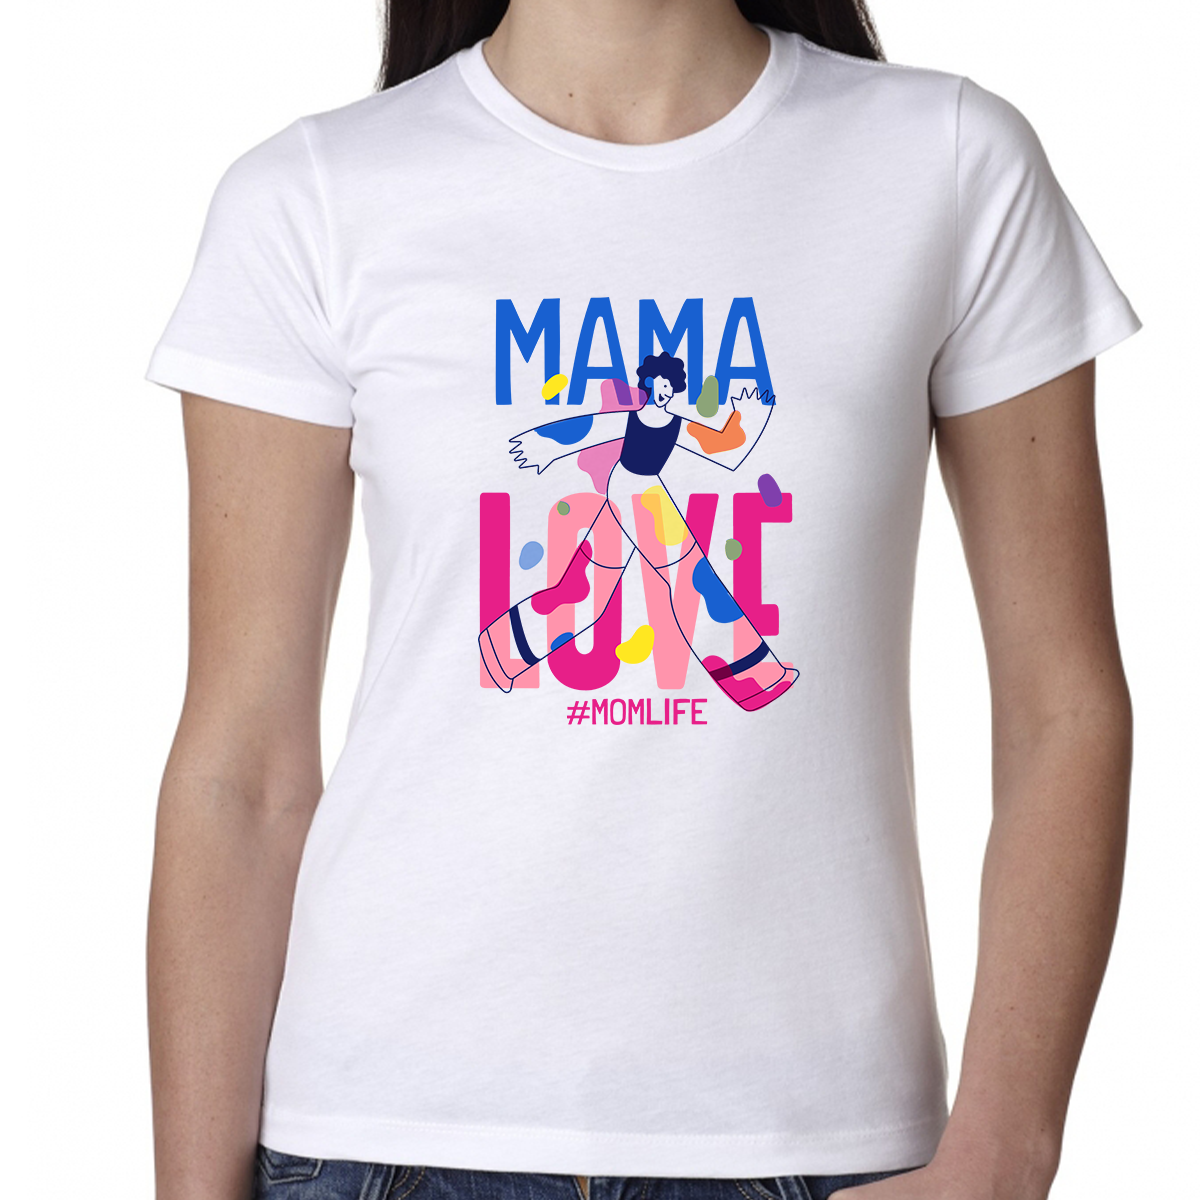 Mama Shirts for Women Love Mom Shirt Mothers Day Shirts Mama Shirt